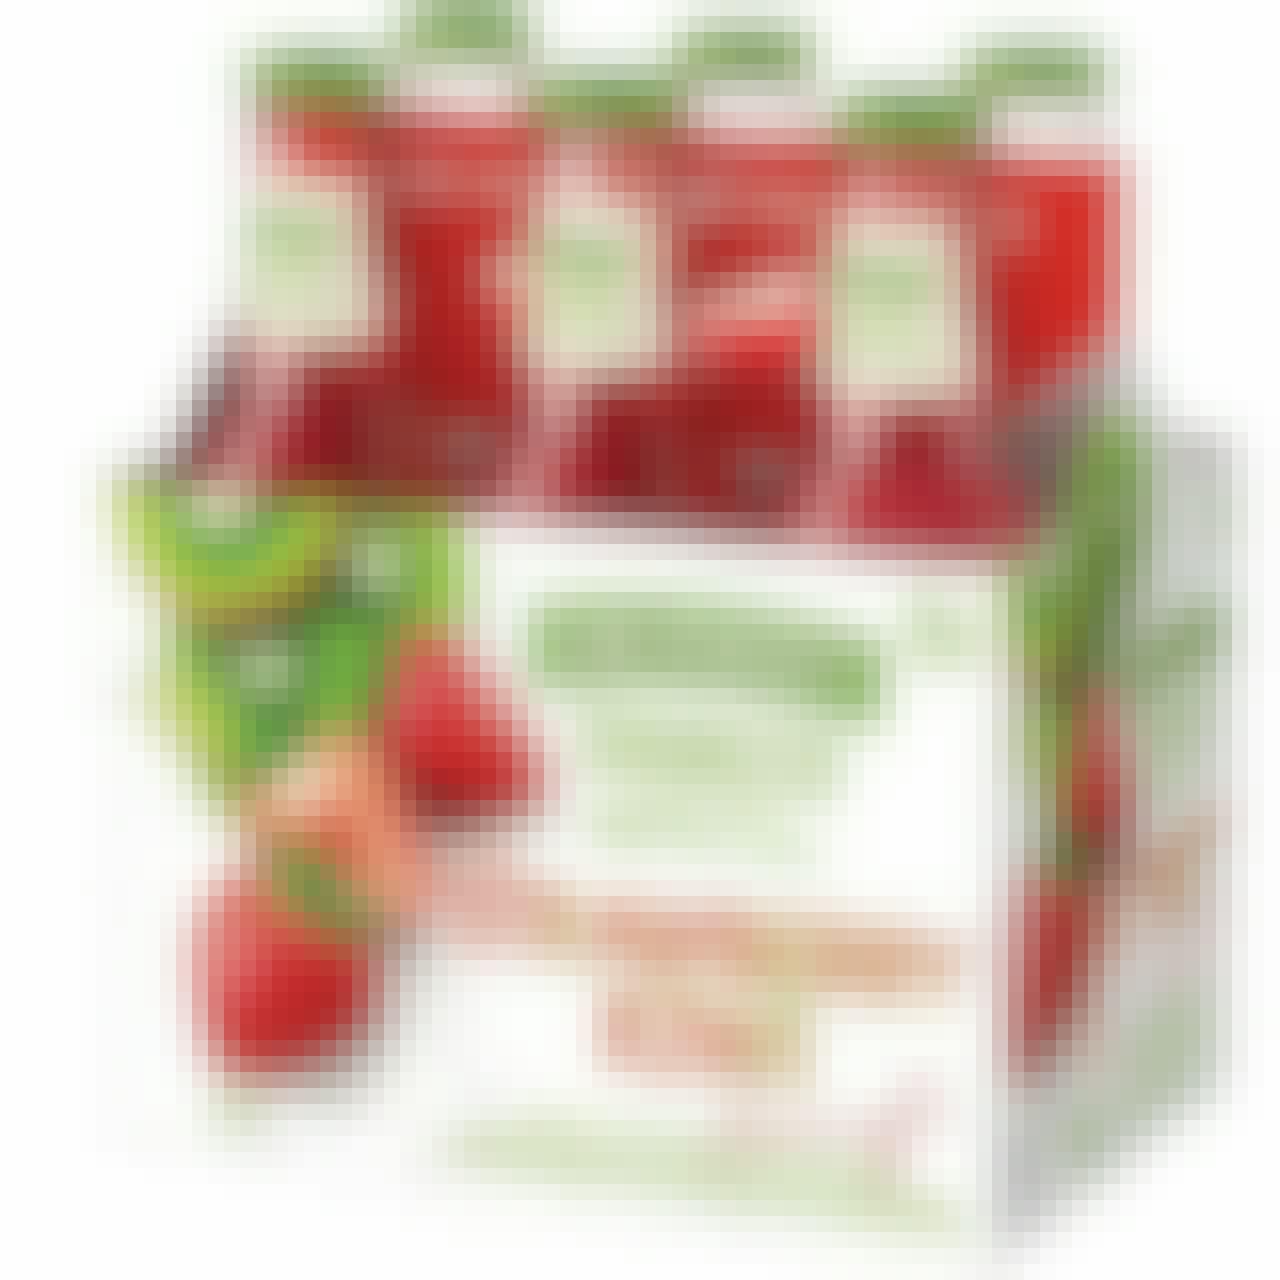 Smirnoff Ice Sourced Strawberry Kiwi 6 pack 12 oz. Bottle